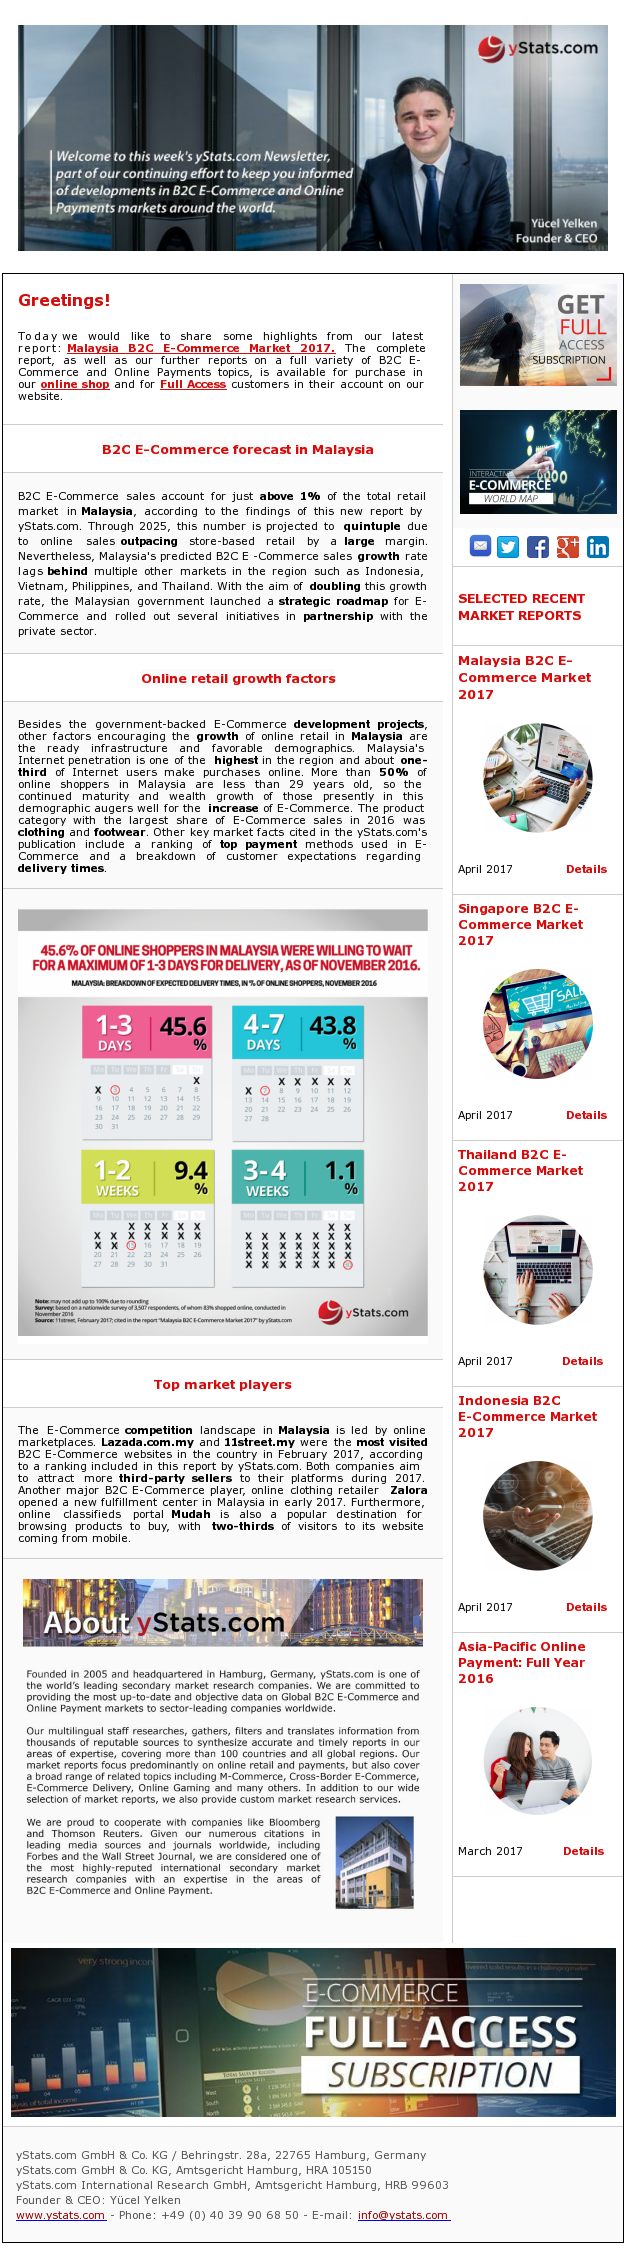 final-malaysia-b2c-e-commerce-market-2017